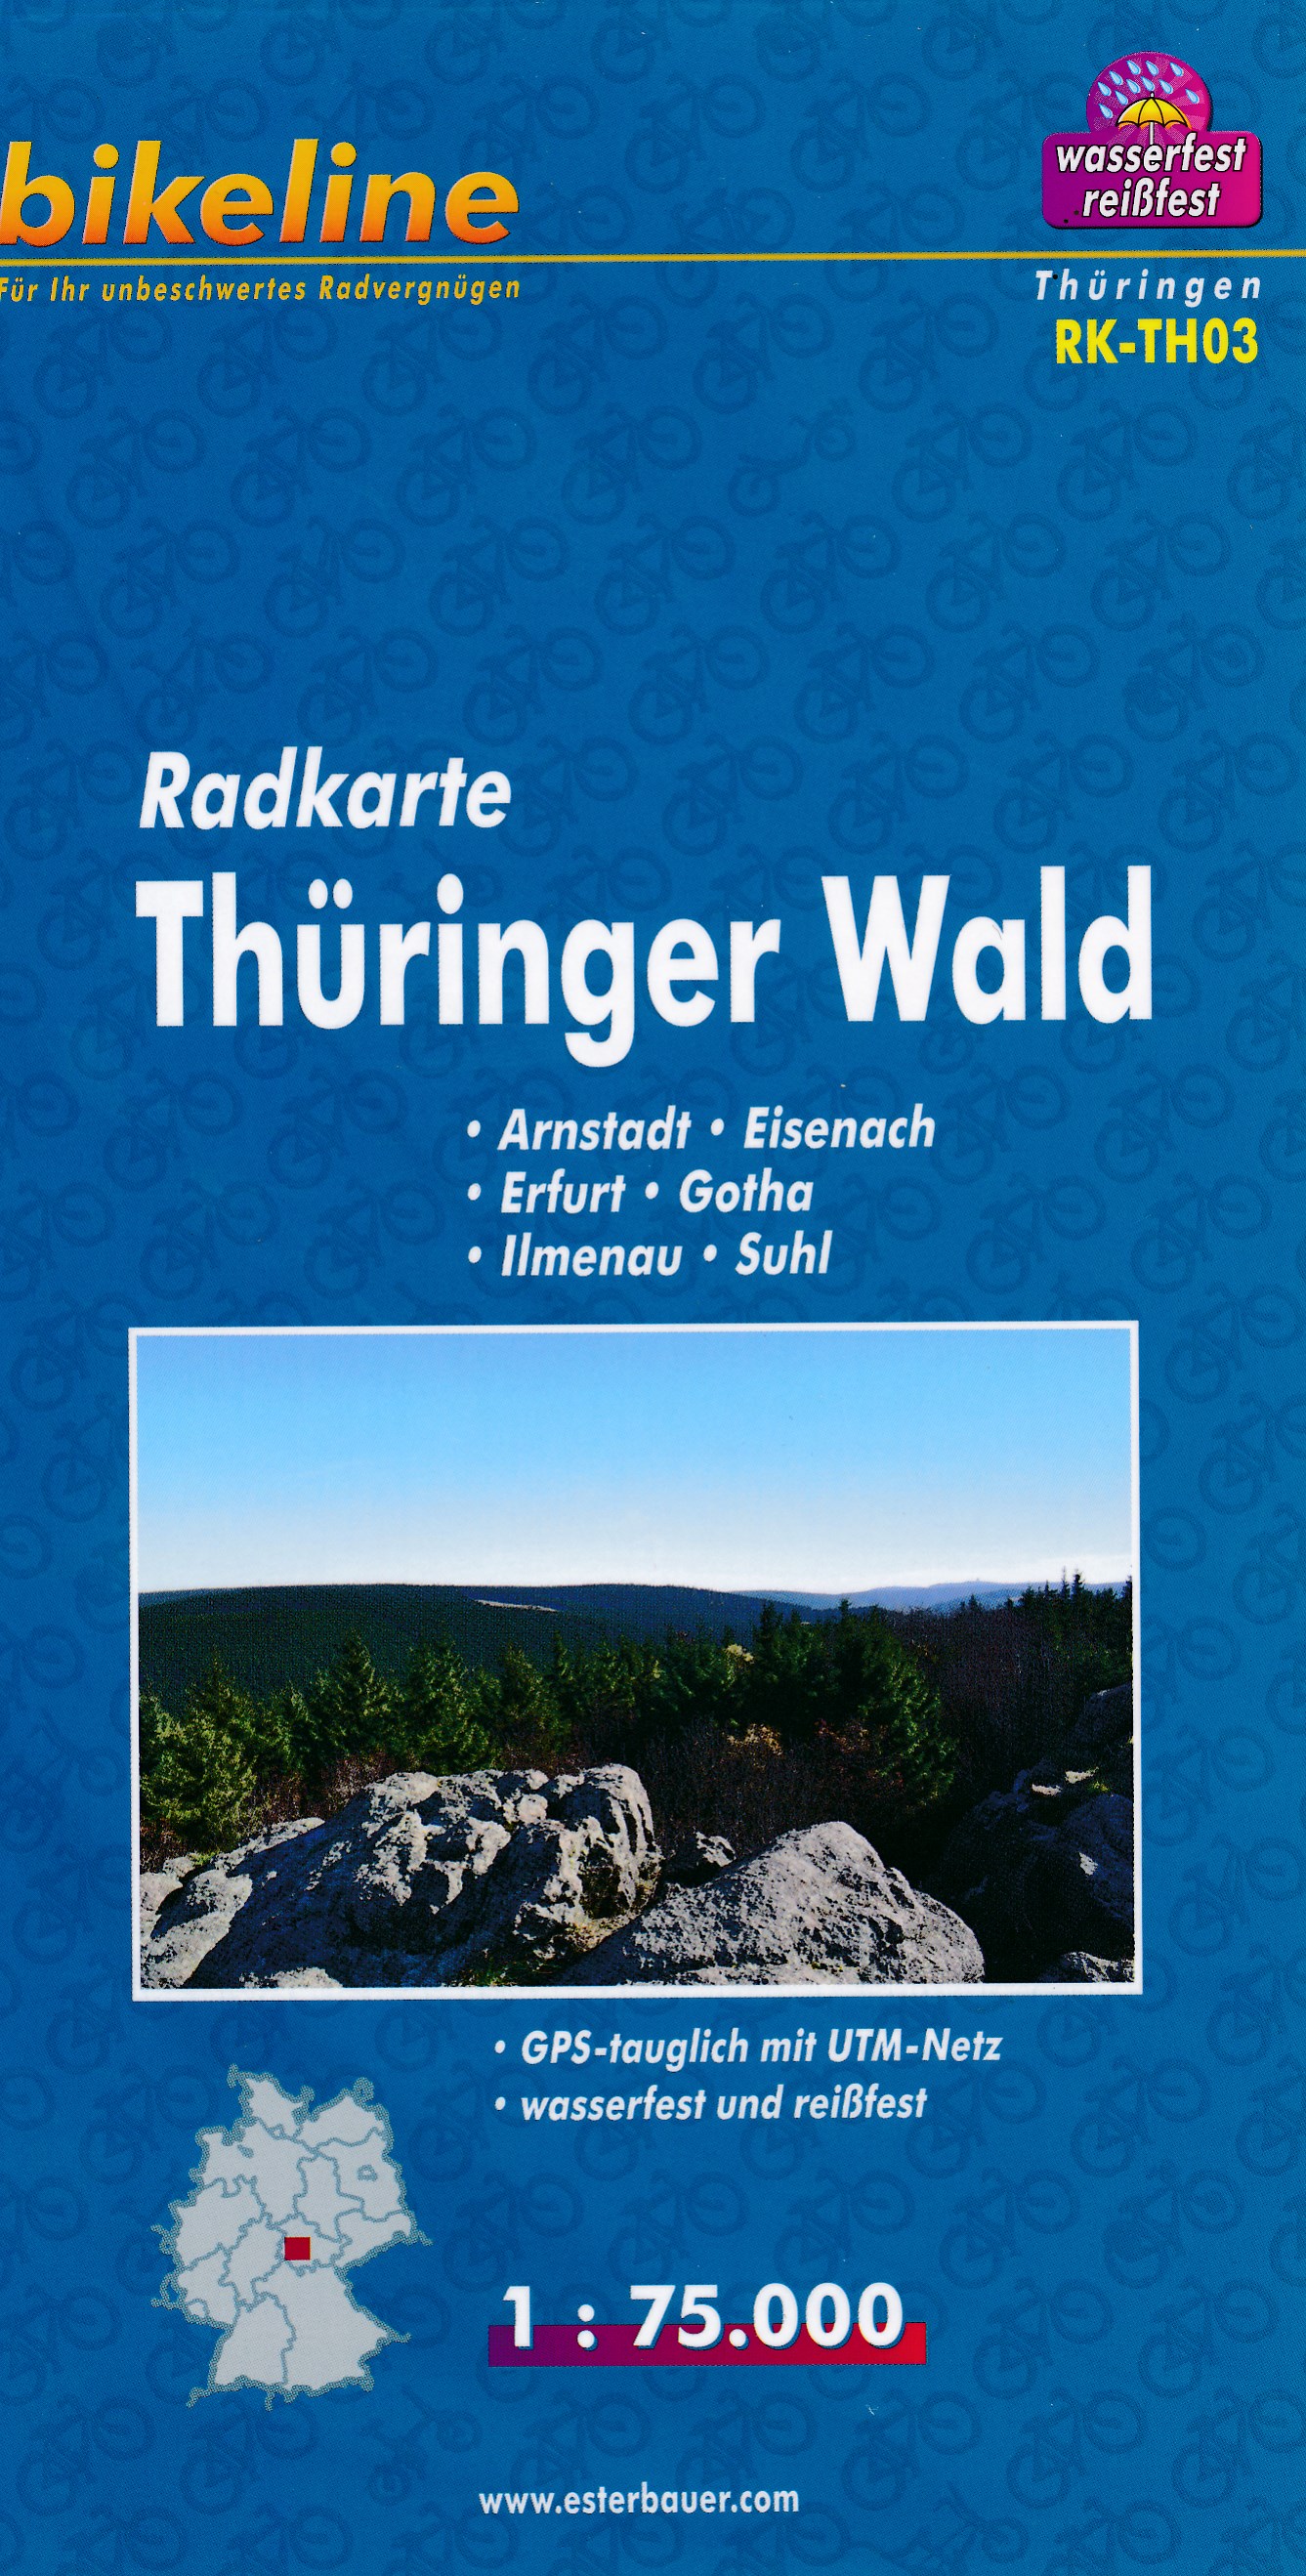 Online bestellen: Fietskaart TH03 Bikeline Radkarte Thüringer Wald | Esterbauer